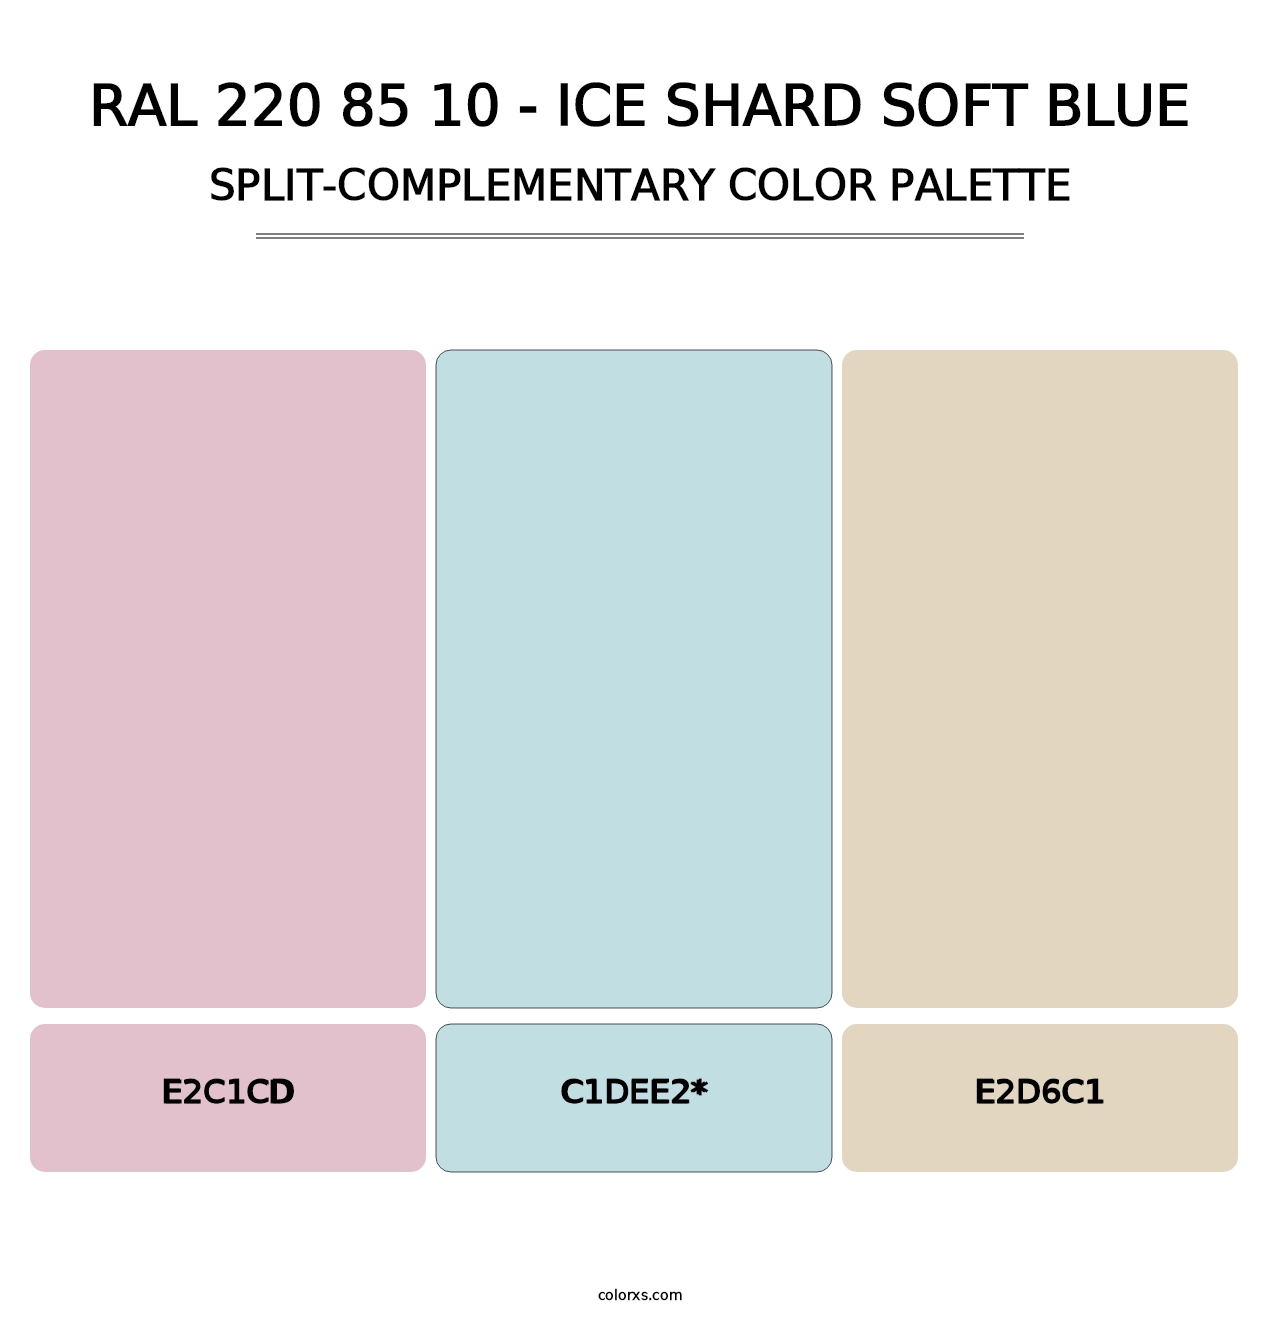 RAL 220 85 10 - Ice Shard Soft Blue - Split-Complementary Color Palette